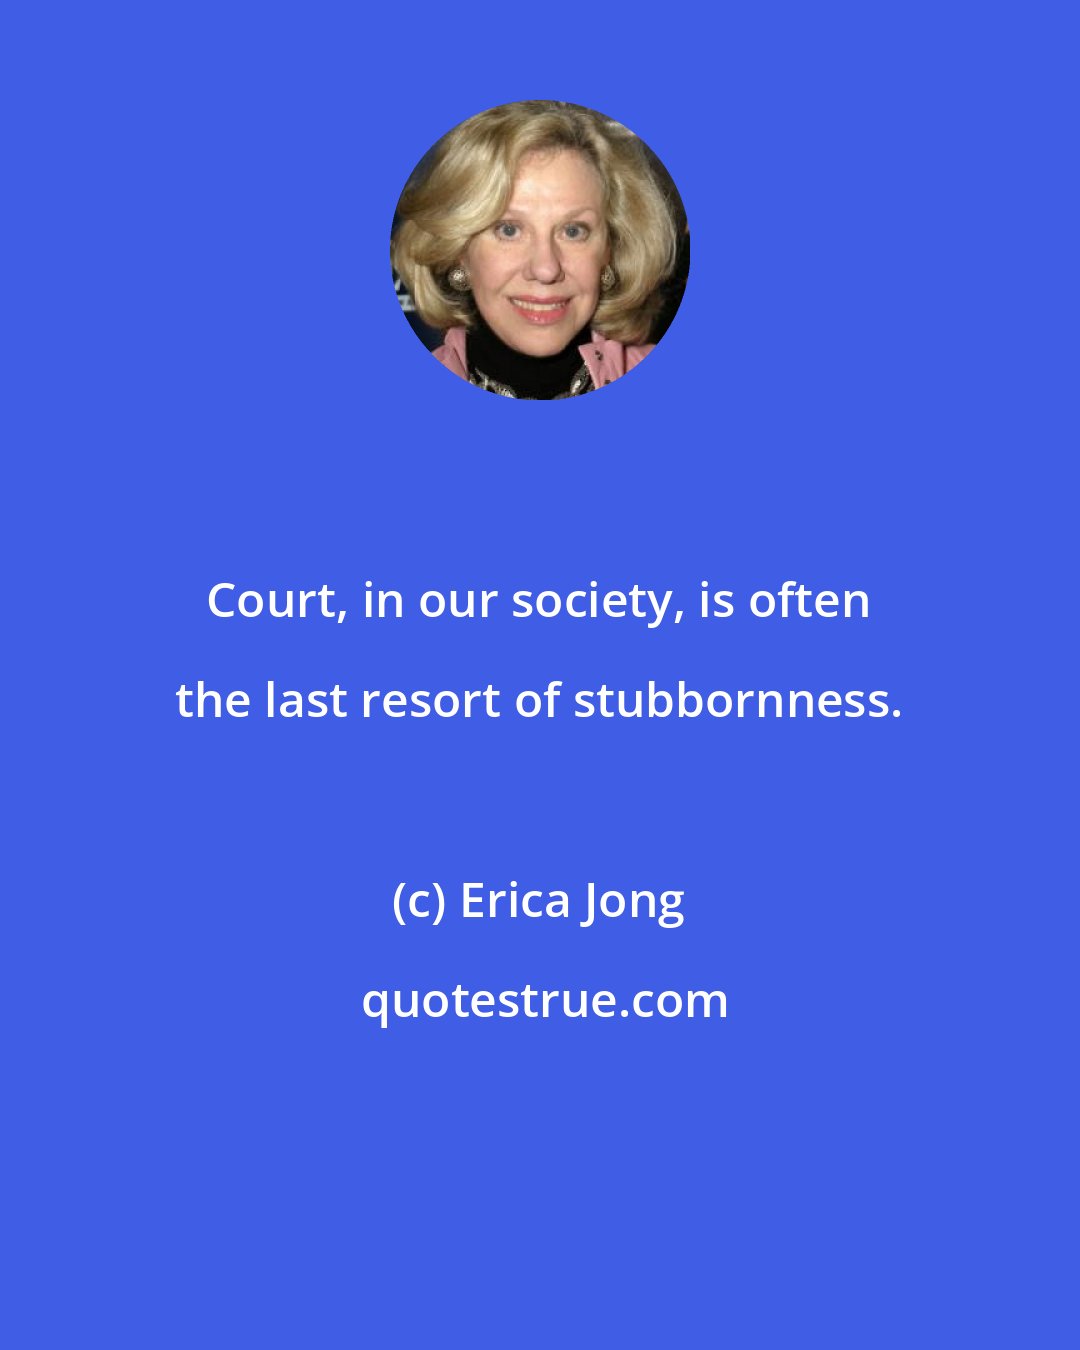 Erica Jong: Court, in our society, is often the last resort of stubbornness.